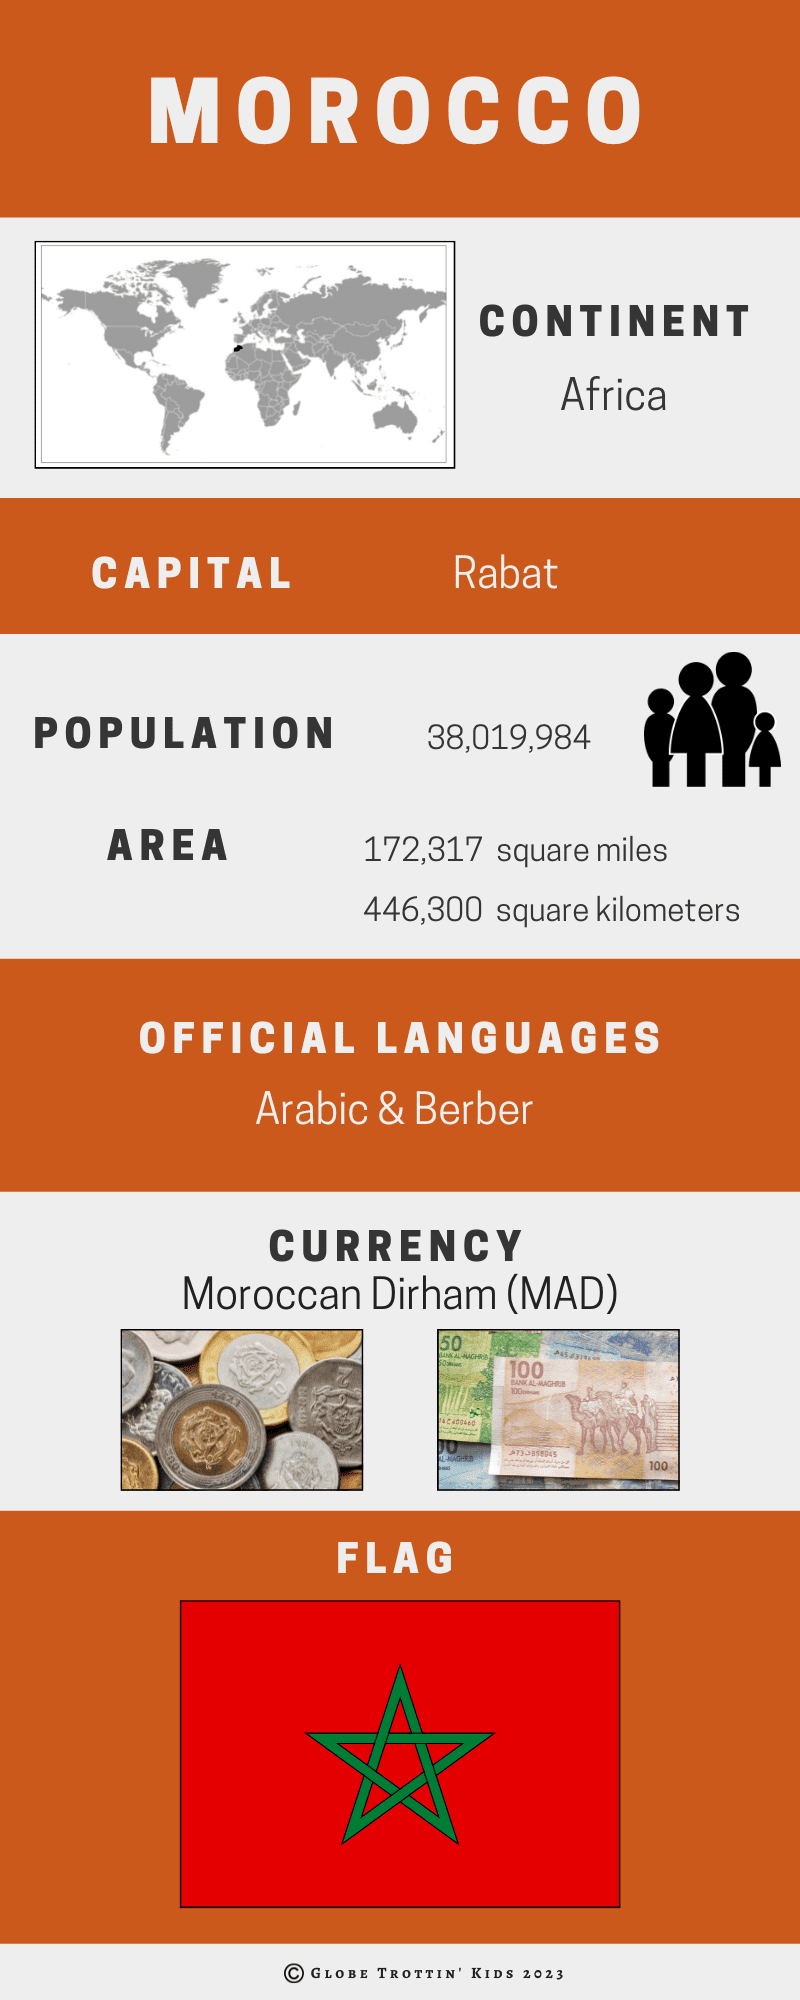 Morocco-infographic